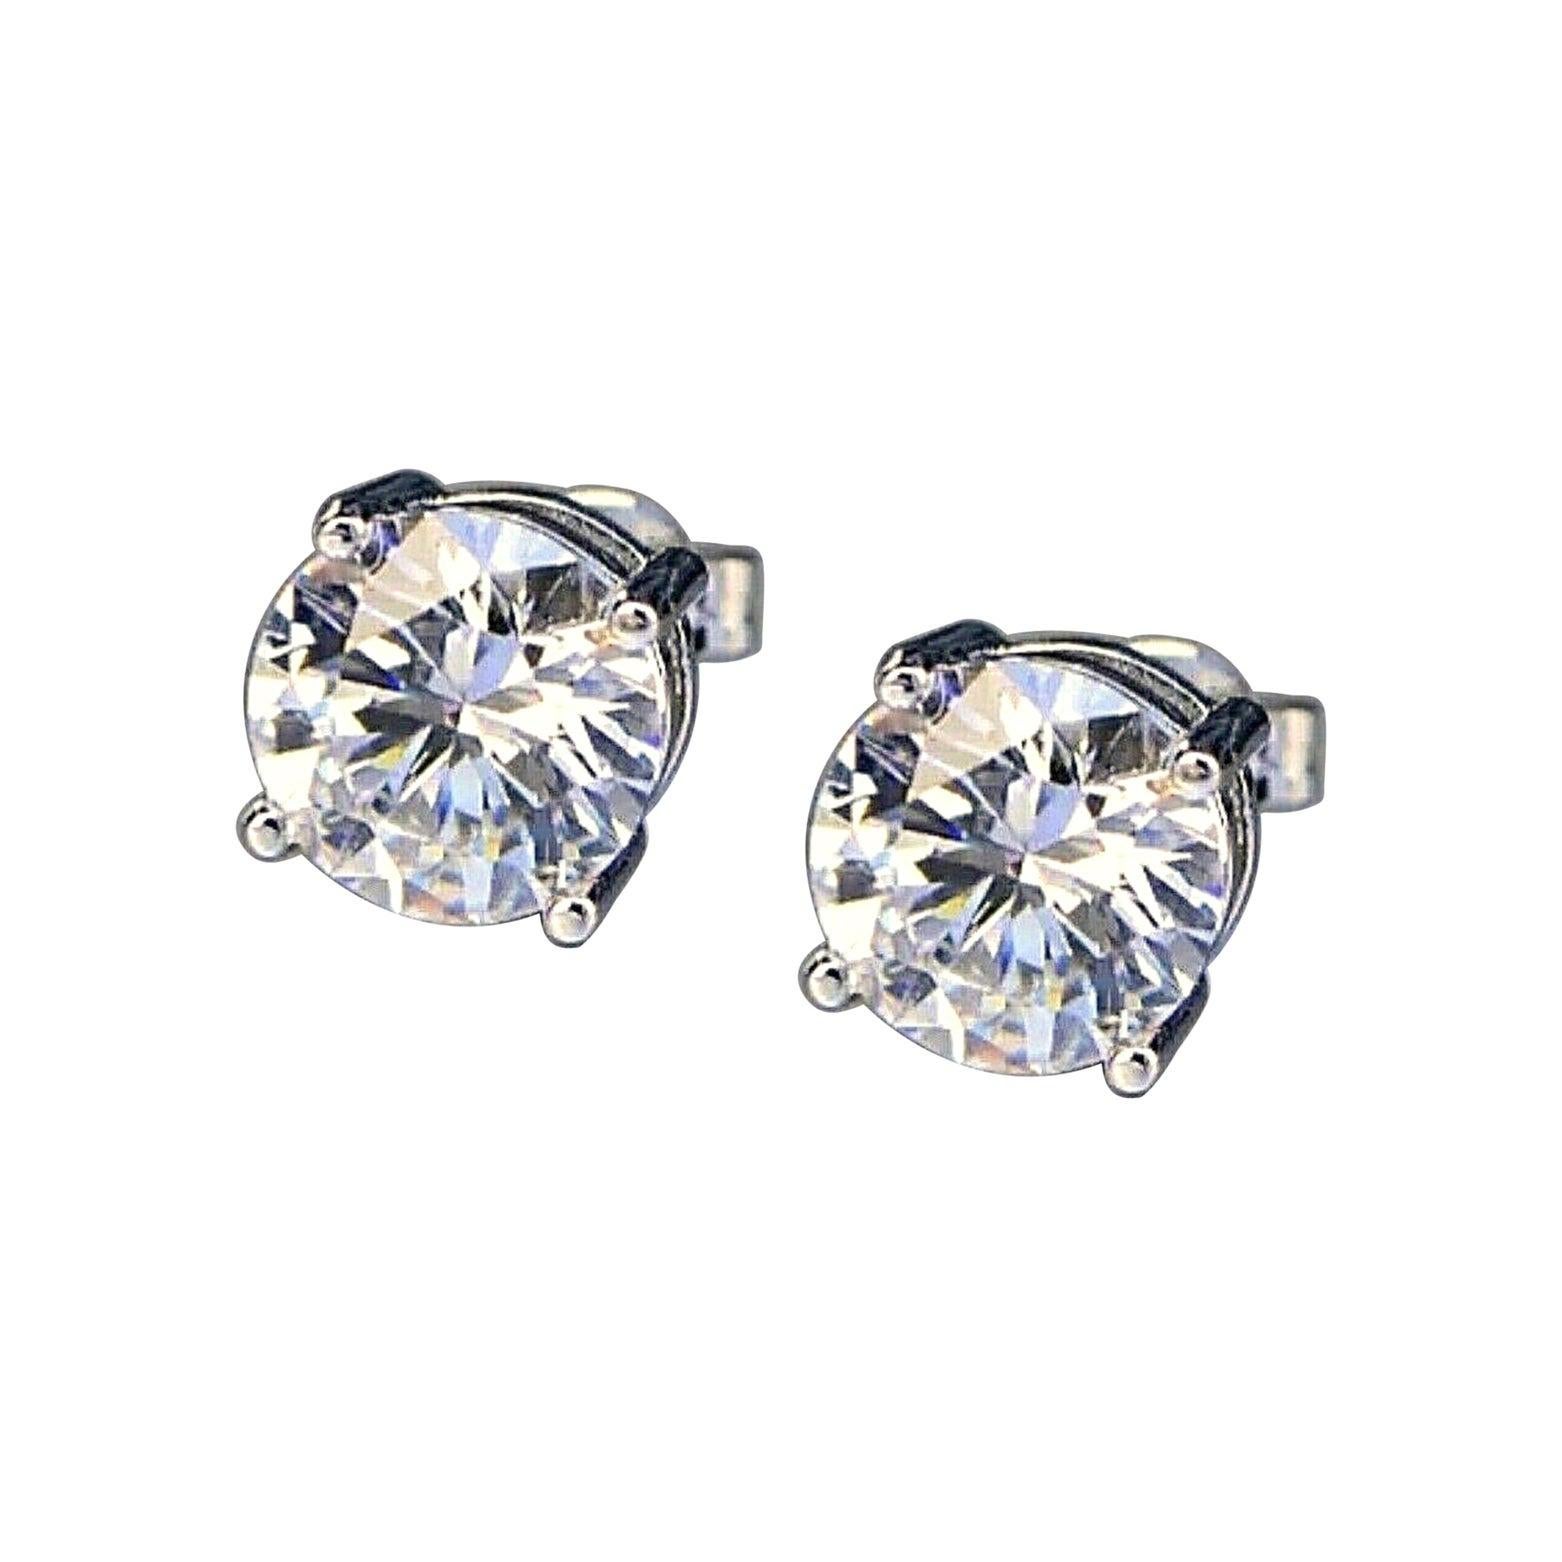 3.20 Carat Round Cut Diamond Stud Earrings Platinum